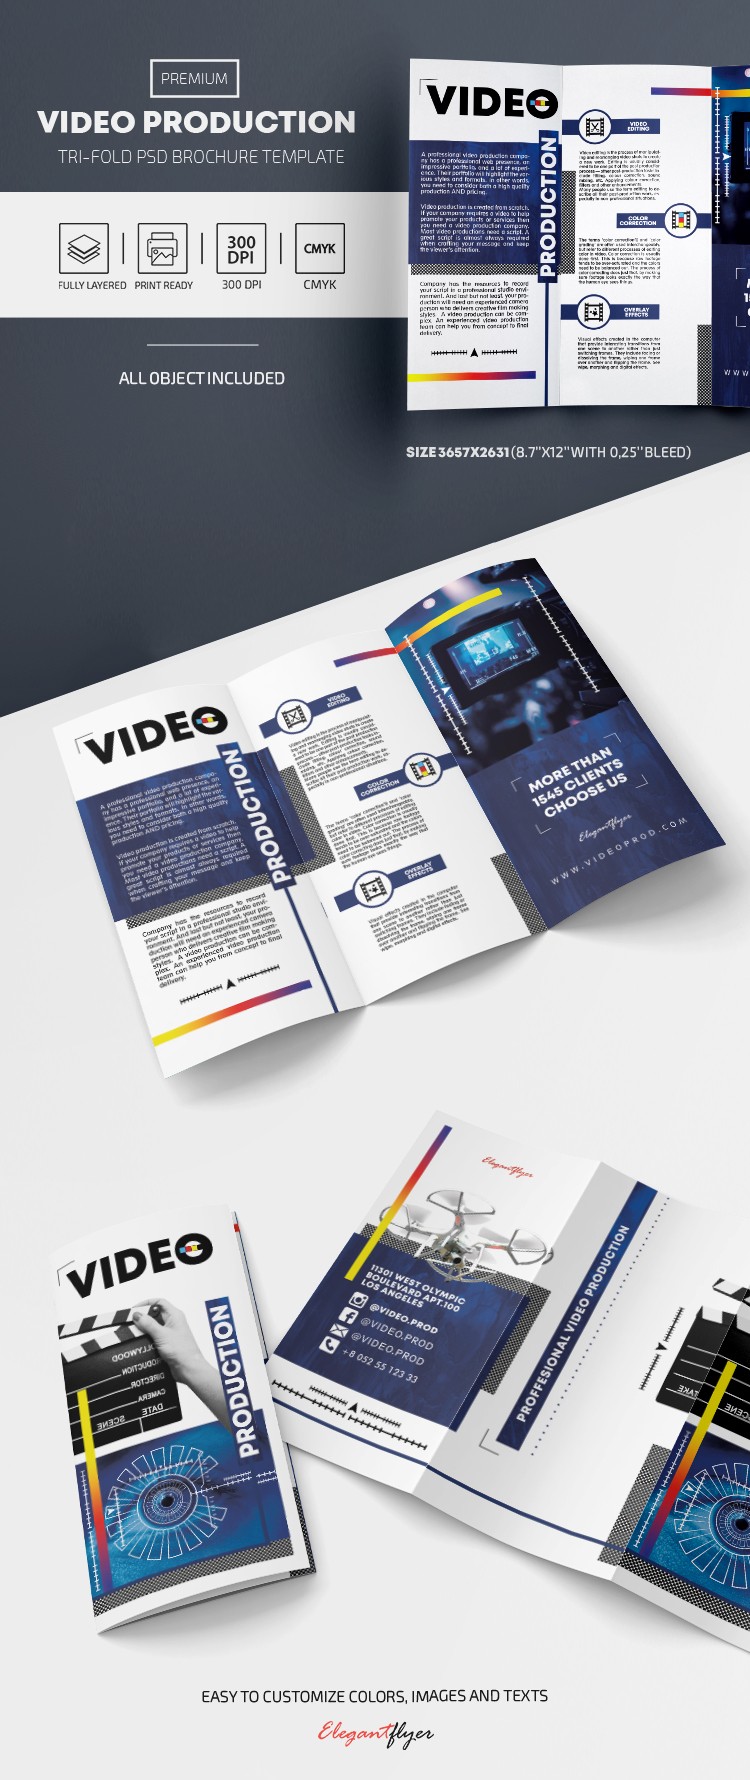 Video Production Brochure by ElegantFlyer